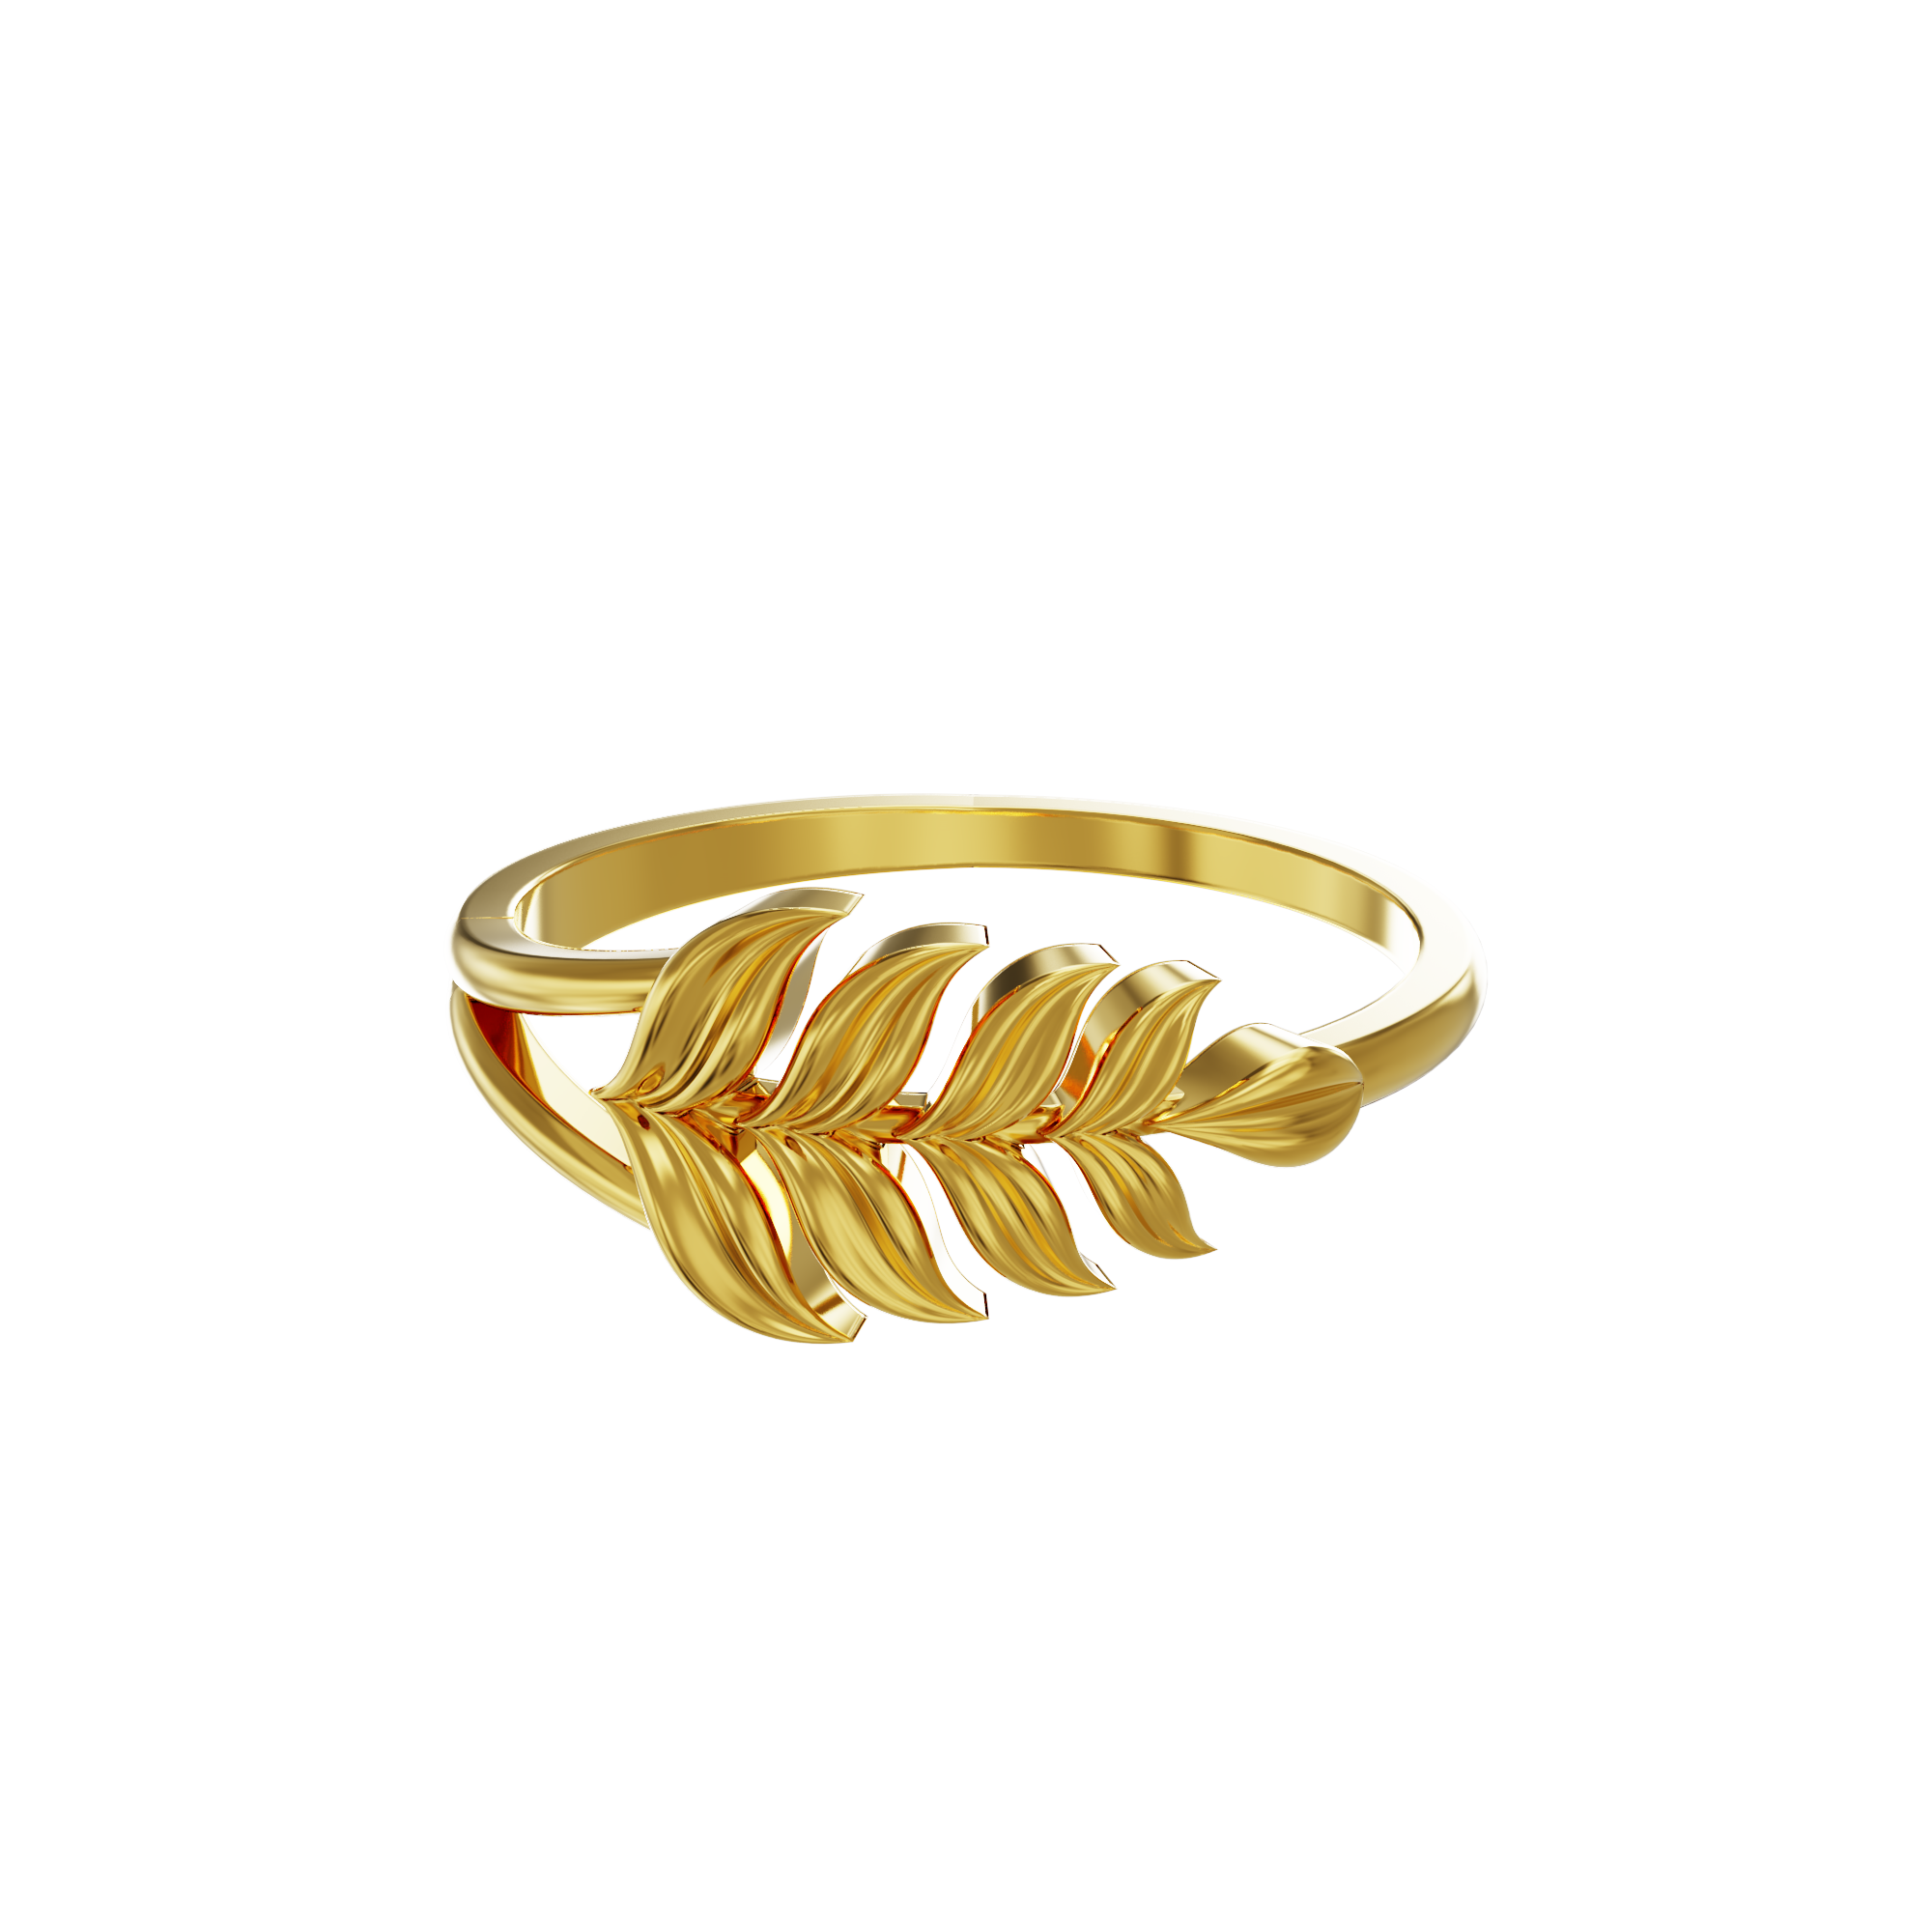 Gold Ring Design | Ring designs, Gold ring designs, Gold rings